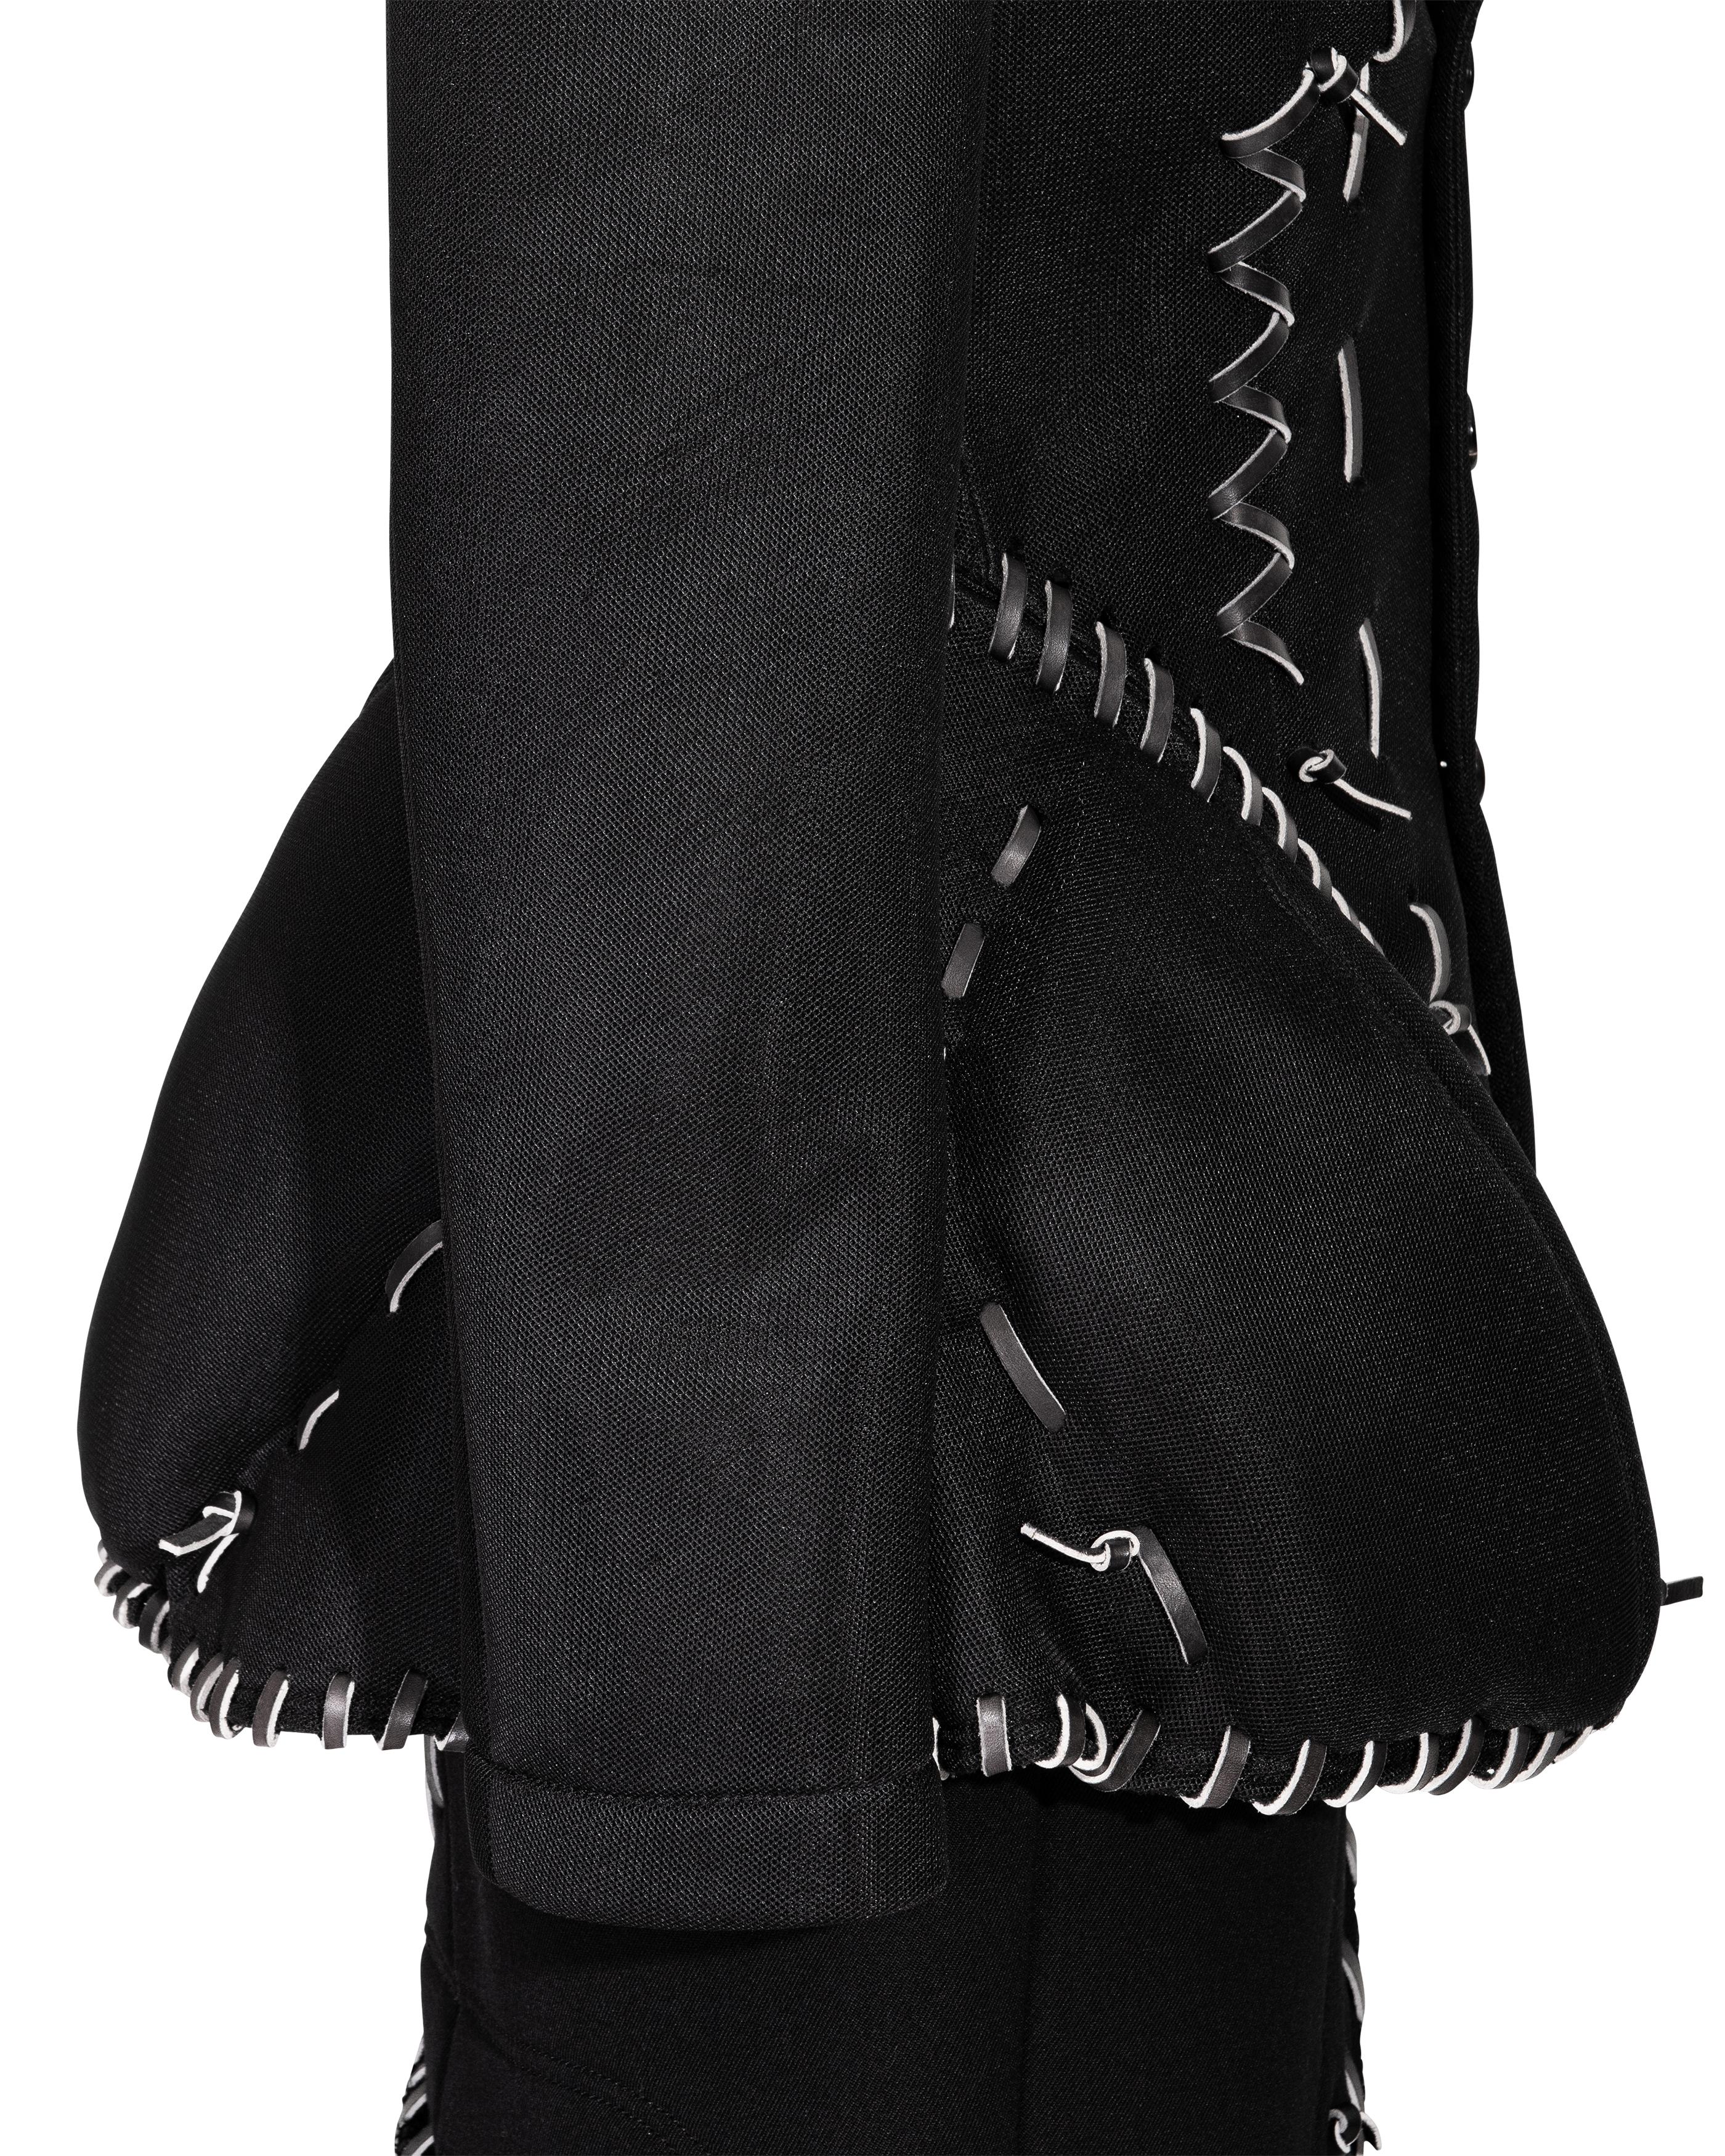 S/S 2005 Comme des Garcons Saddle Stitched Skirt Set For Sale 8